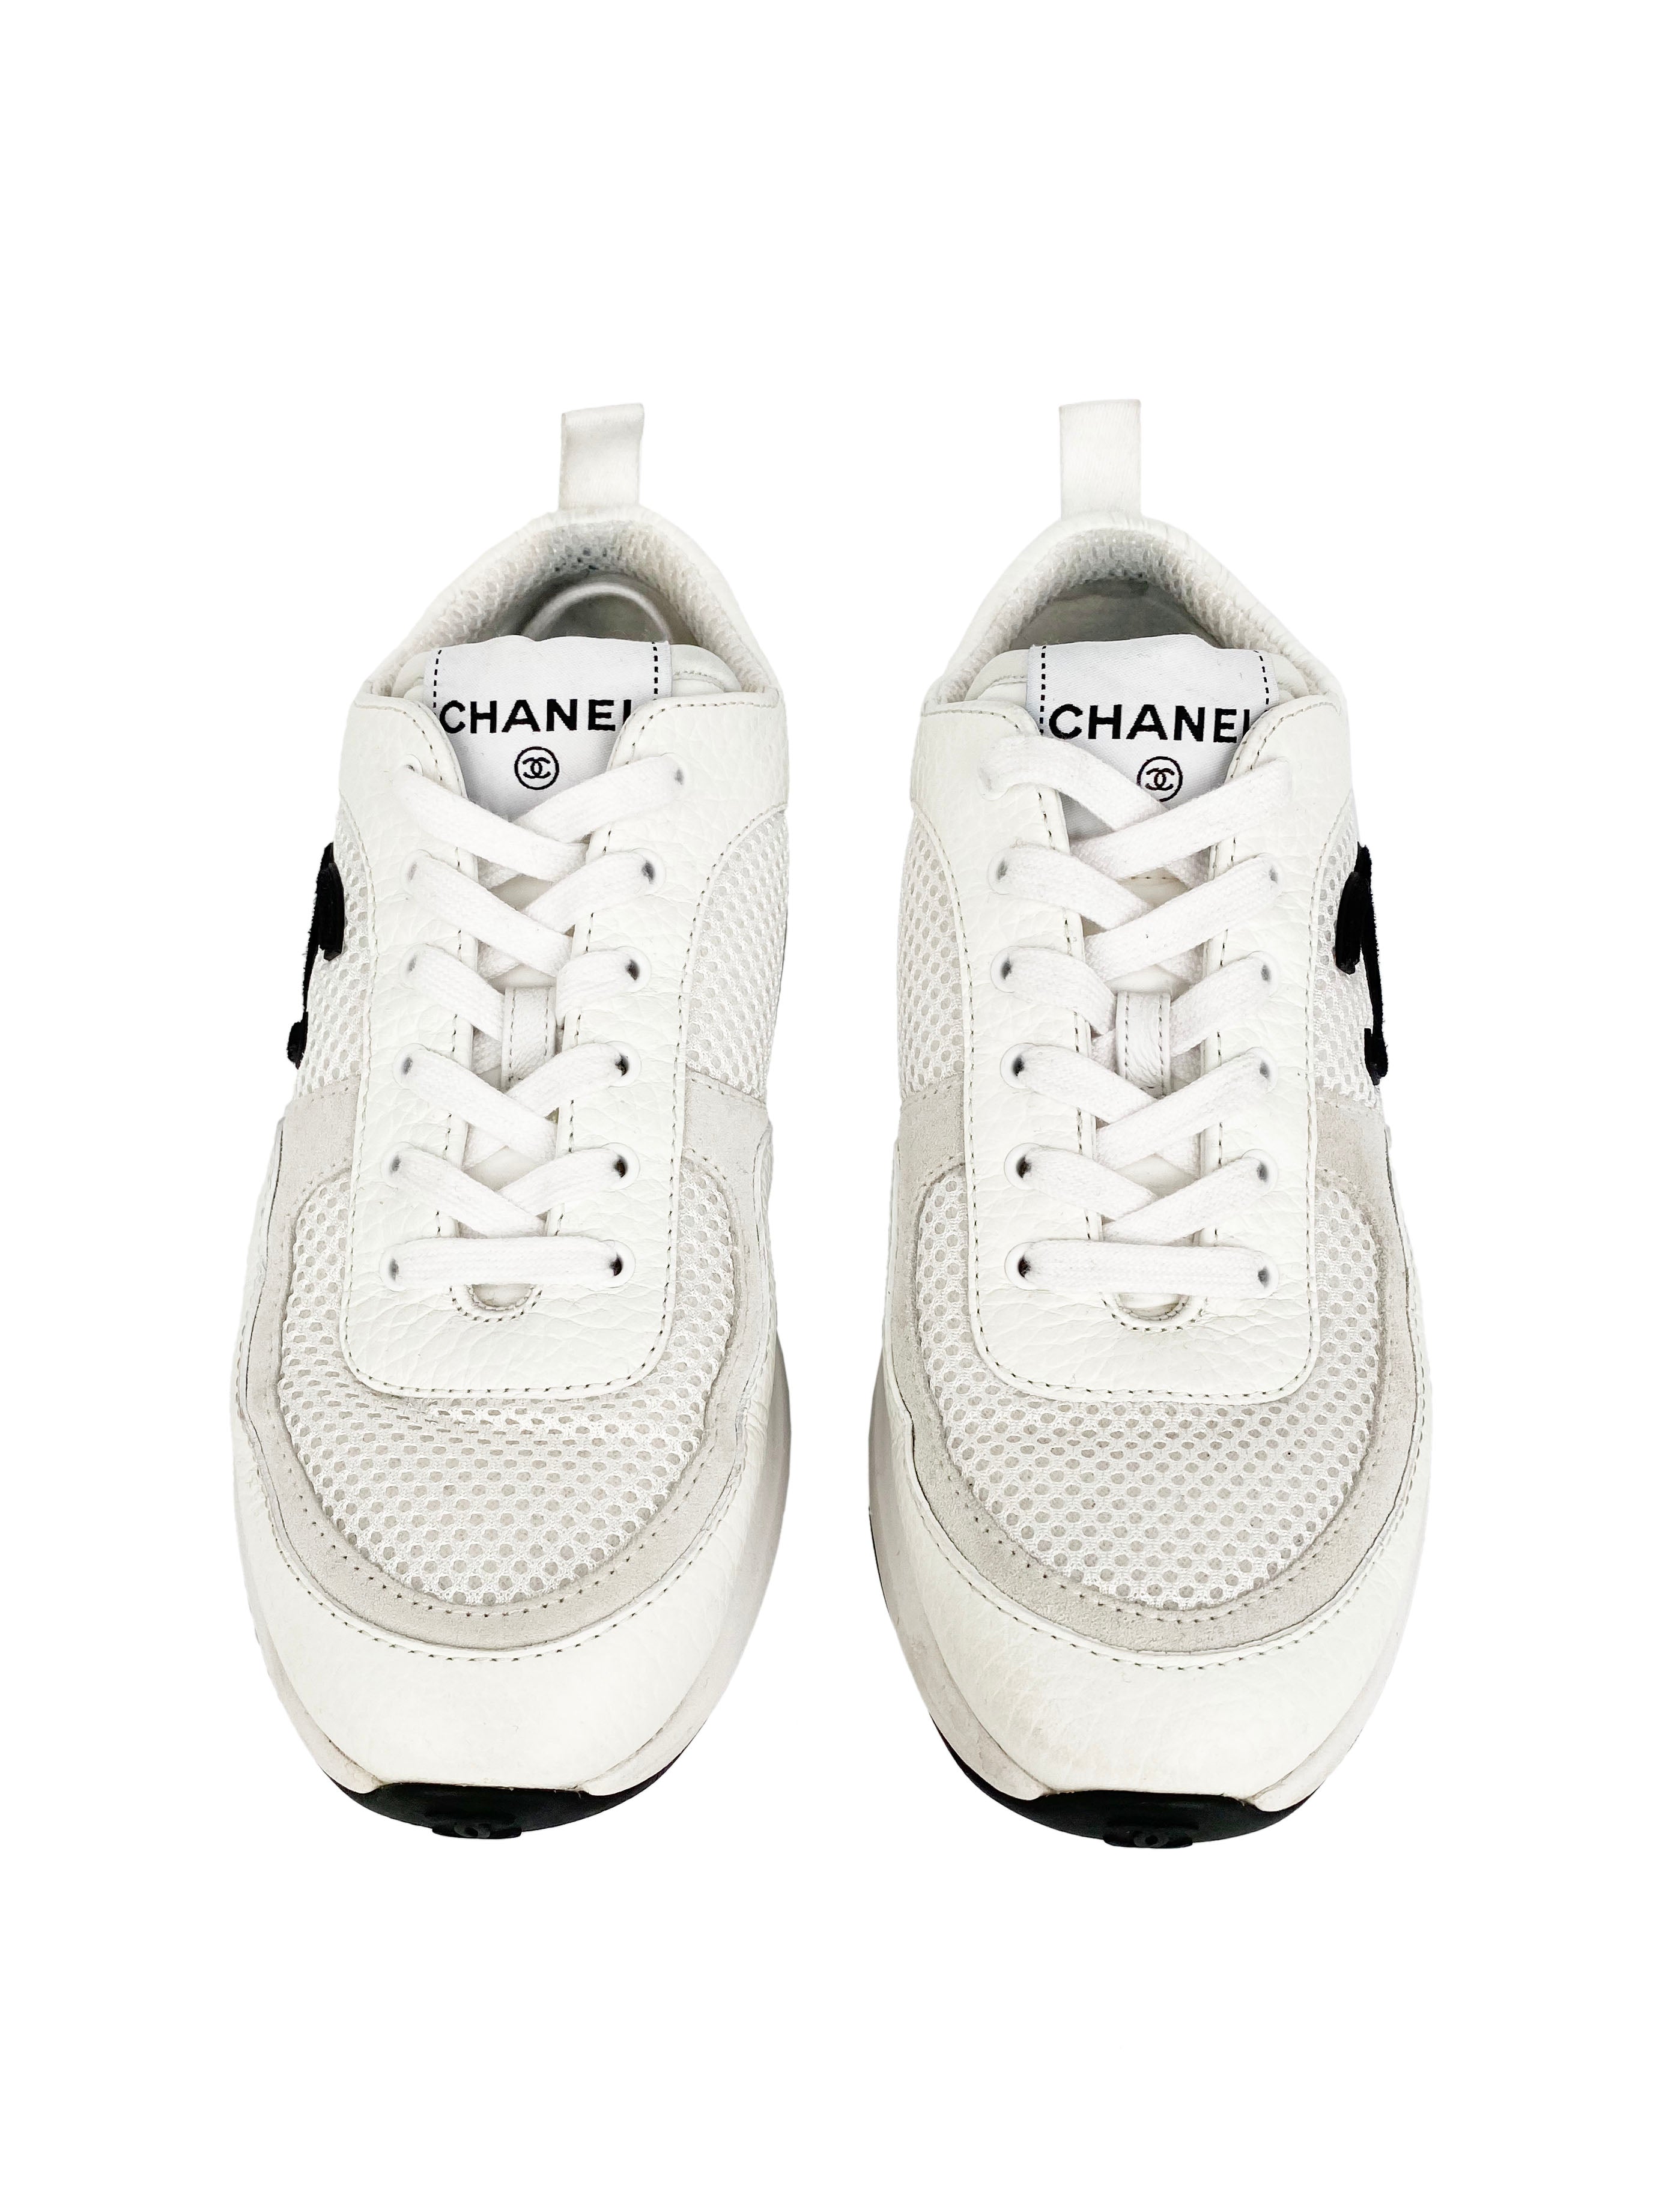 ChanelWhiteCCSneakers38.5-1.jpg